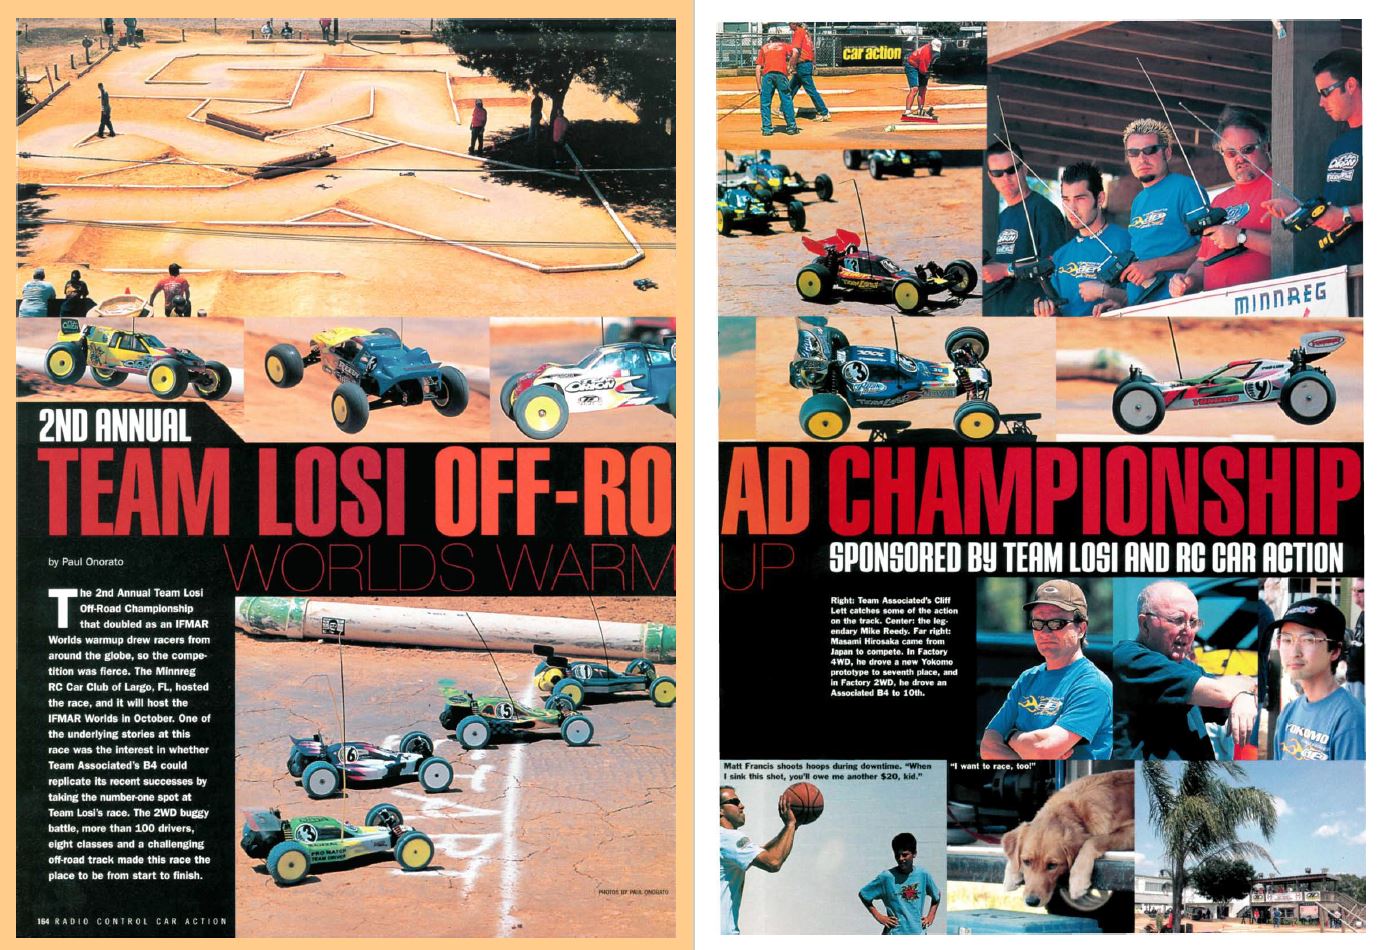 2nd AnnualTeam Losi Off-Road Championship at the Minnreg RC Car Club of Largo, FL Aug 2003 1